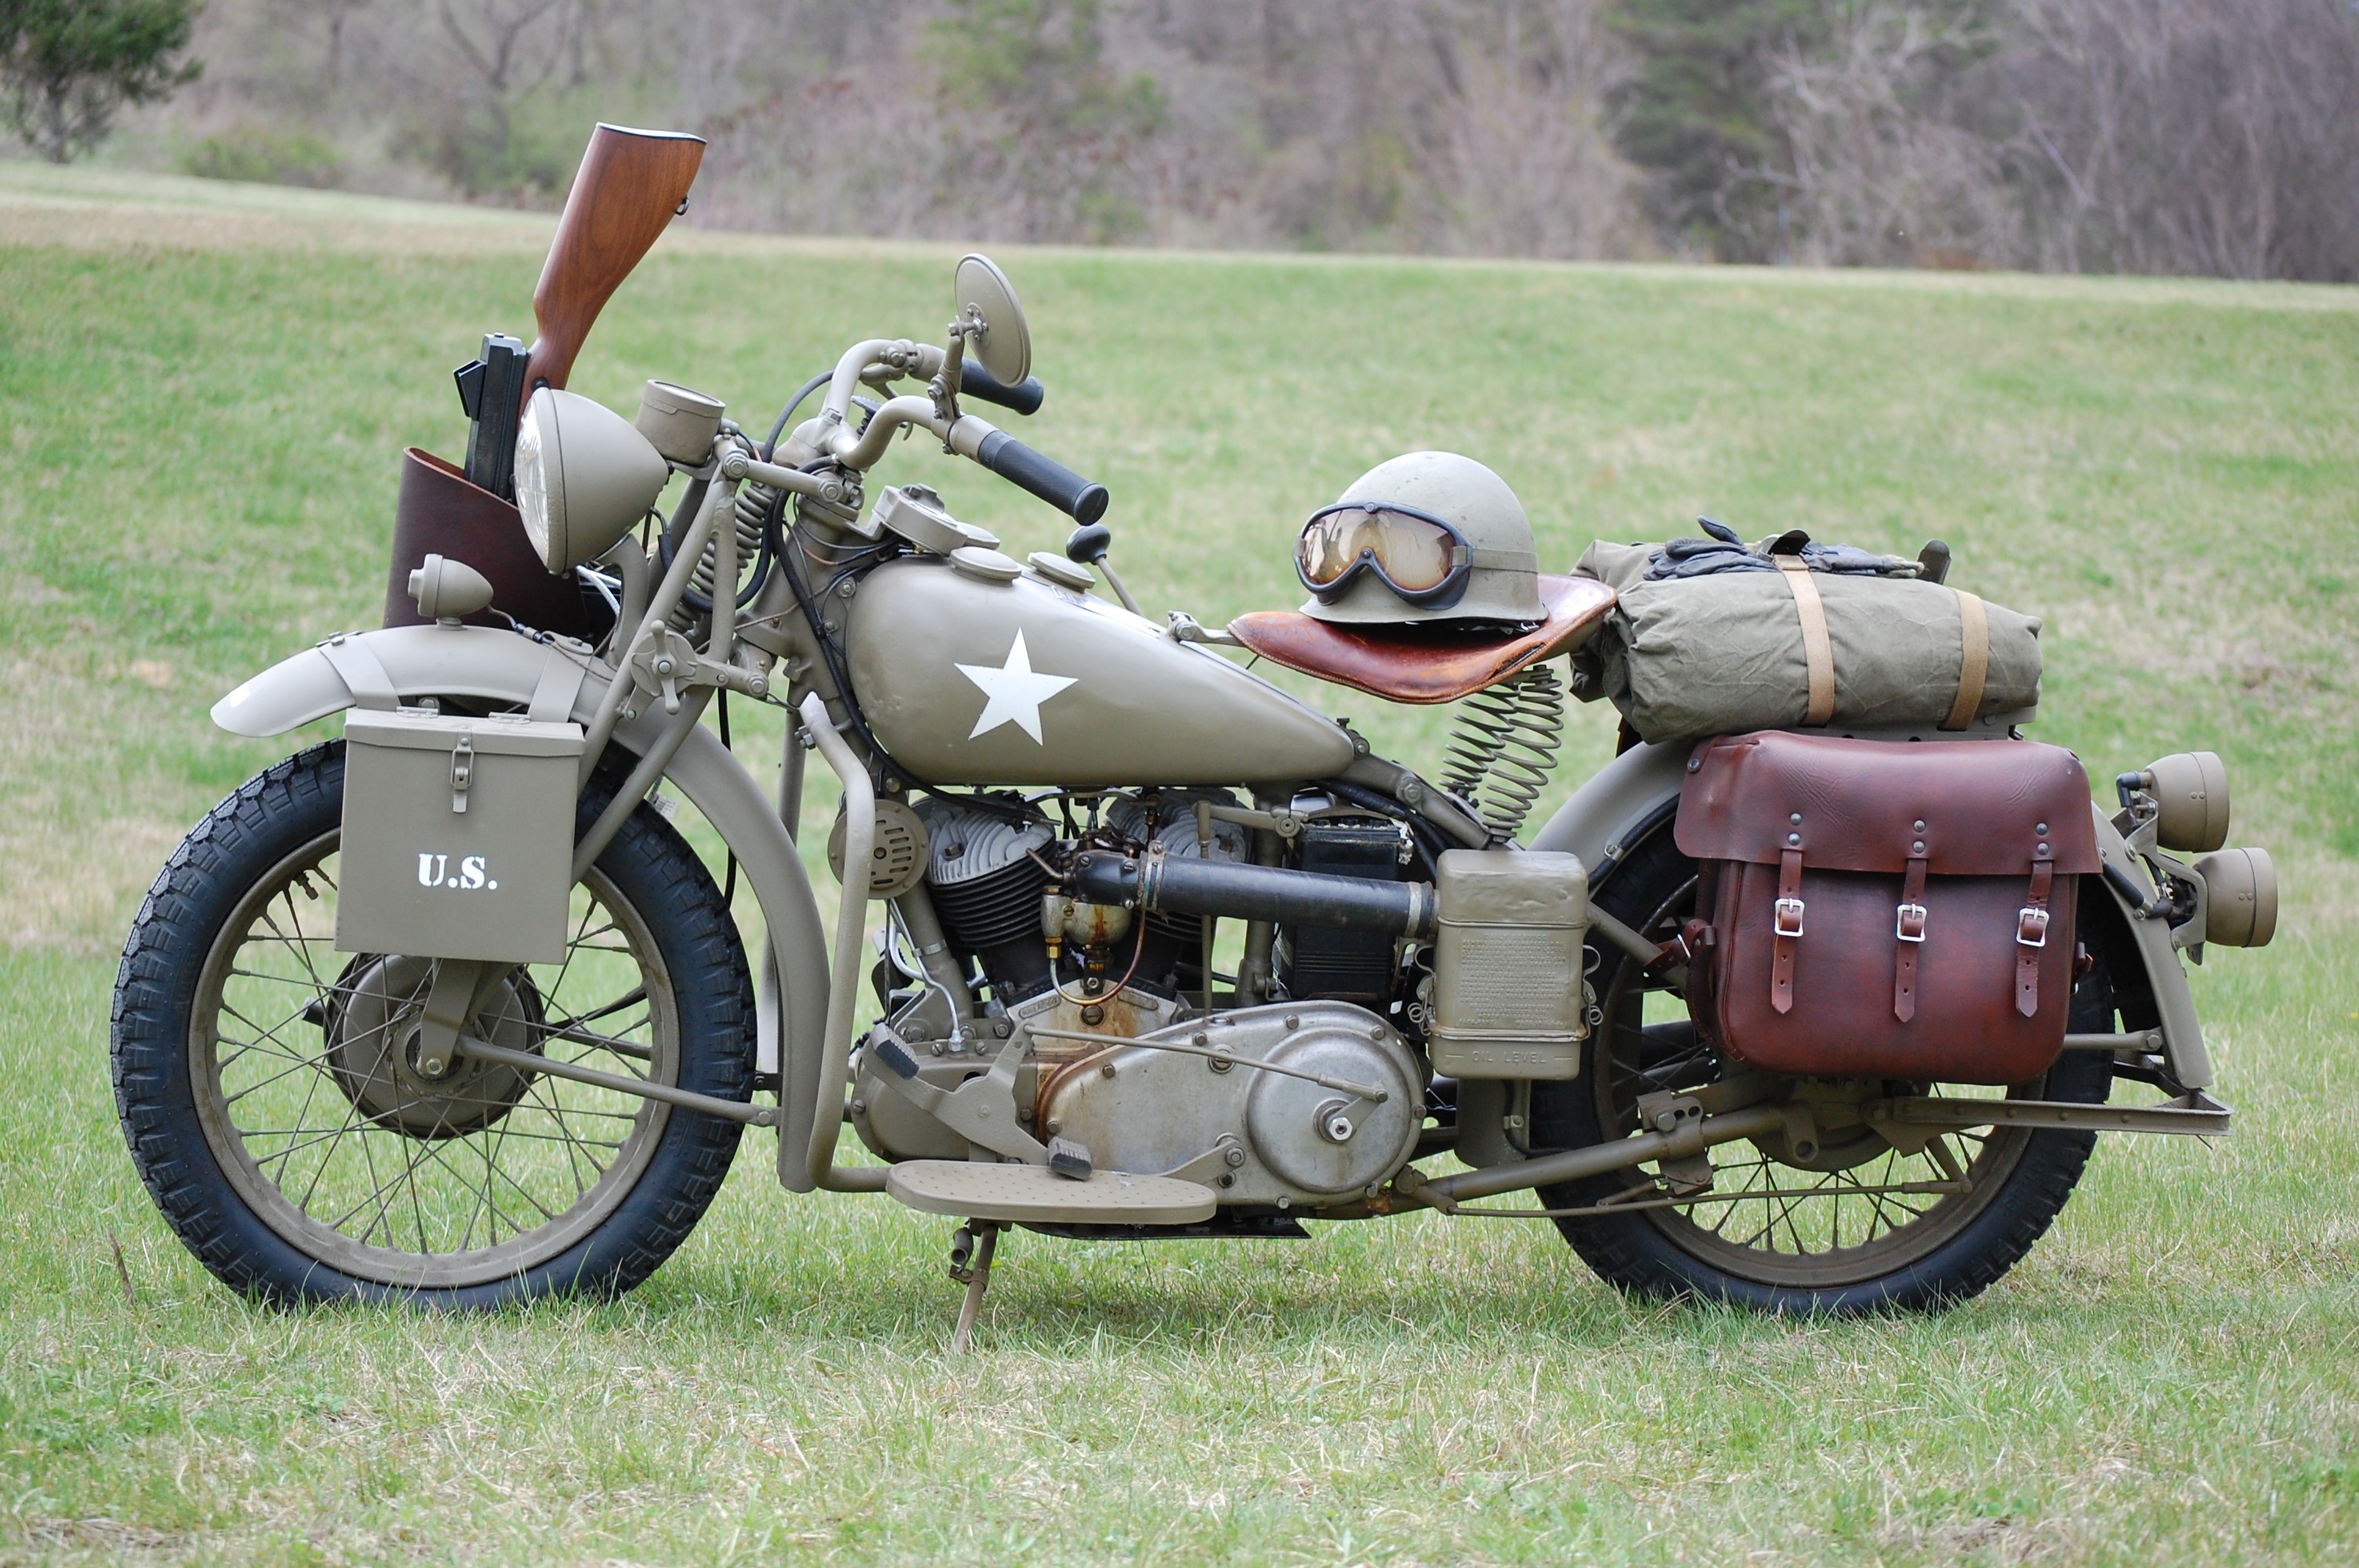 oldschool, World War II, motorcycles - desktop wallpaper